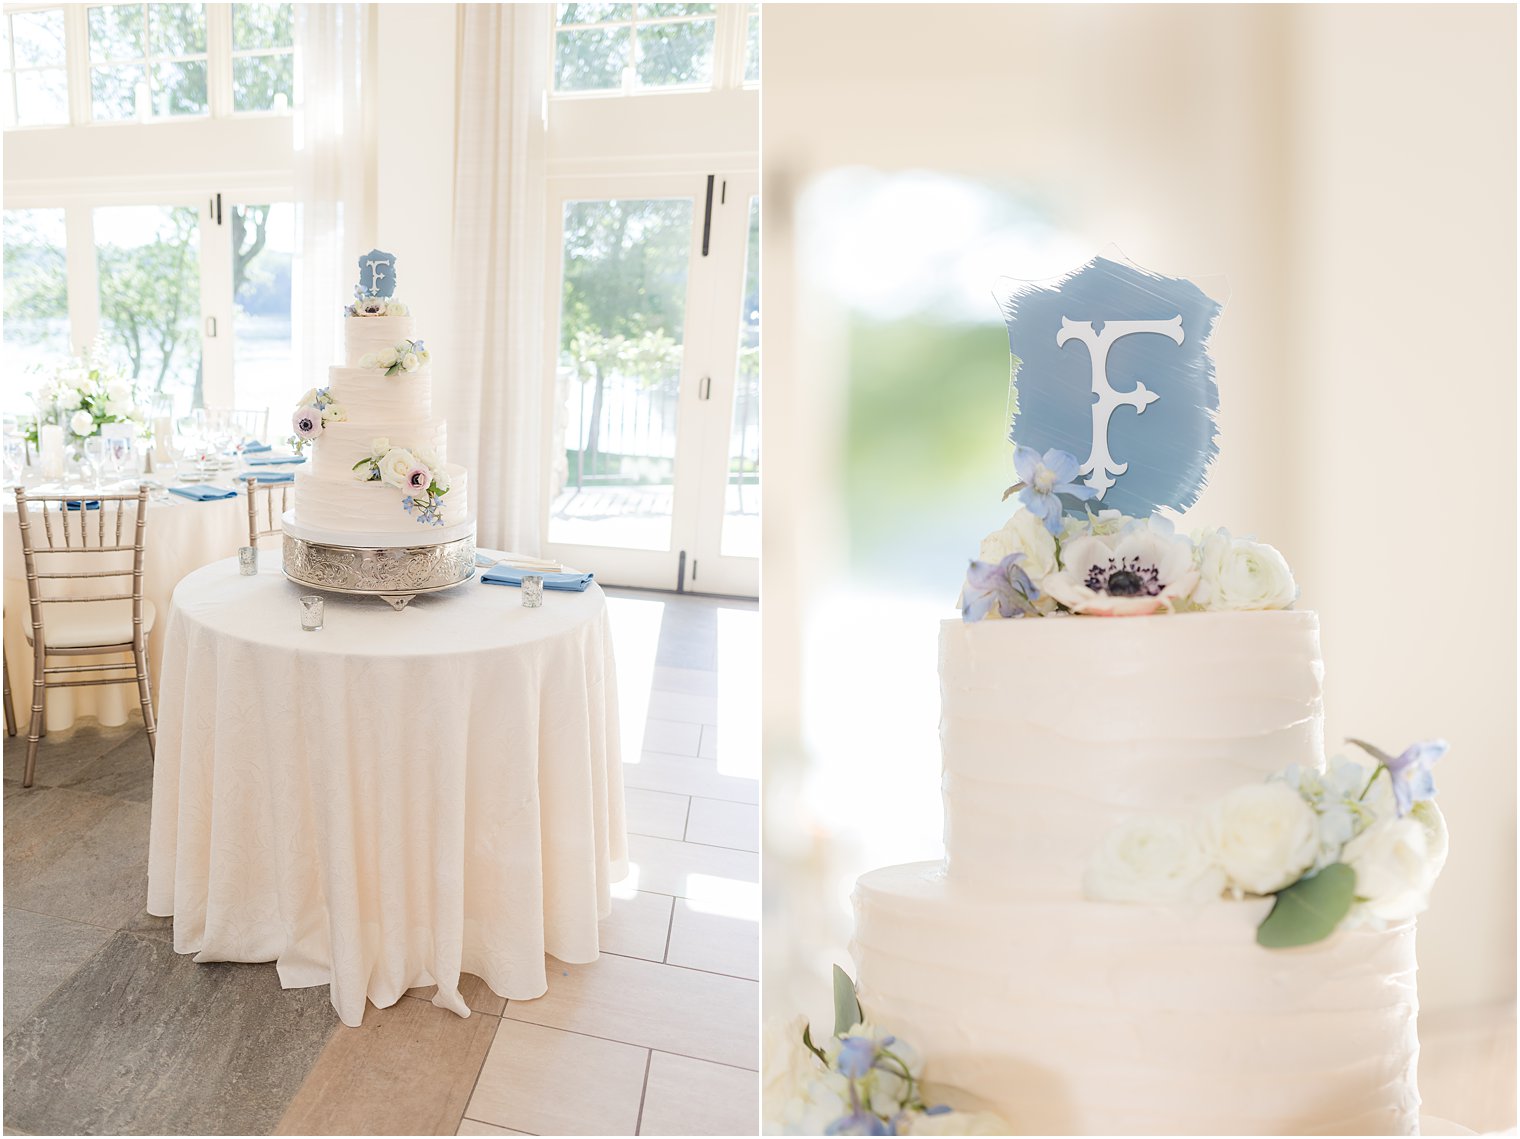 wedding cake with custom "F" on top